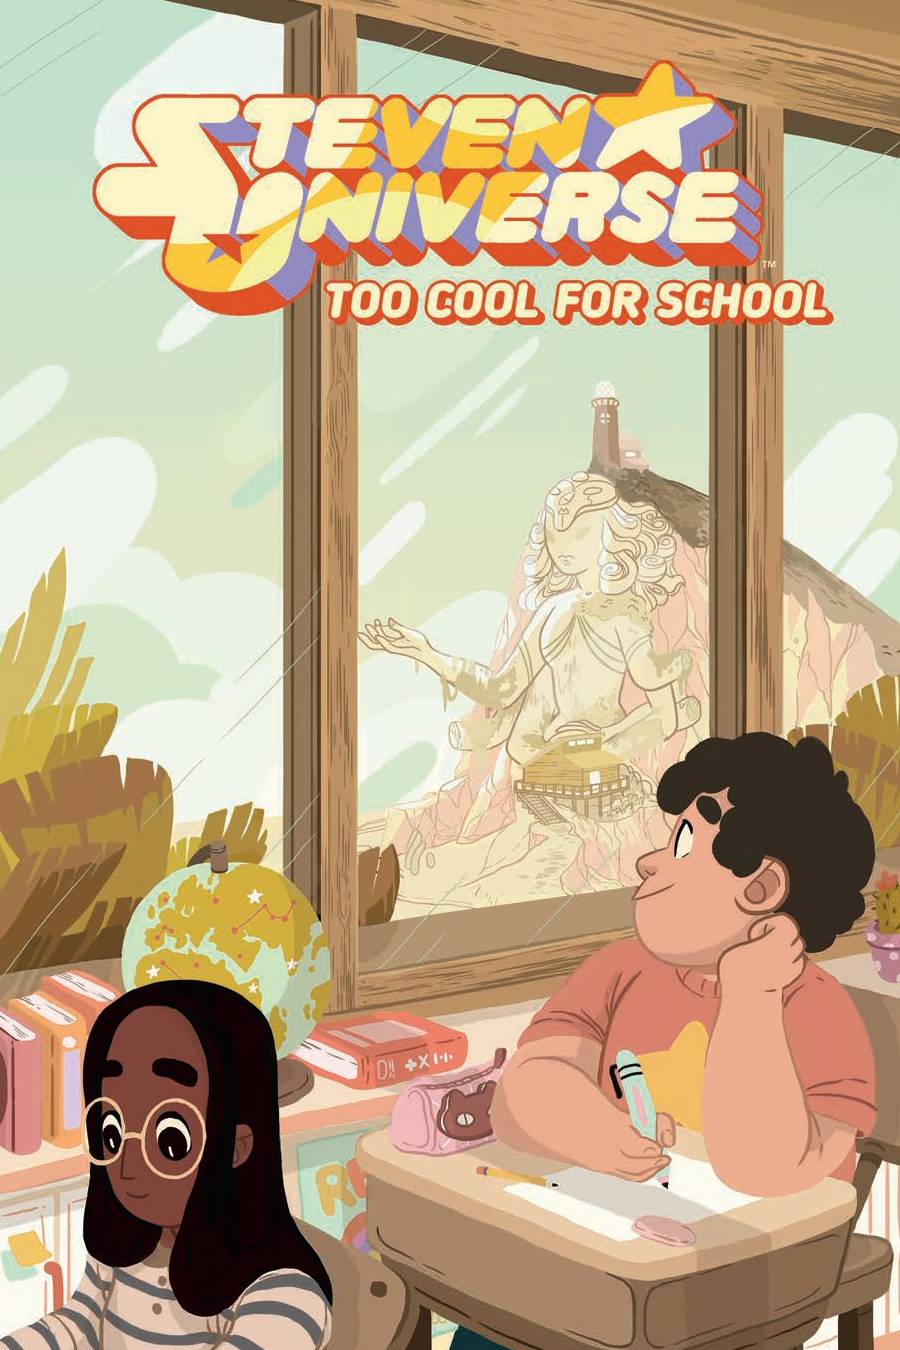 Steven Universe Original Graphic Novel Volume 1 Too Cool for School